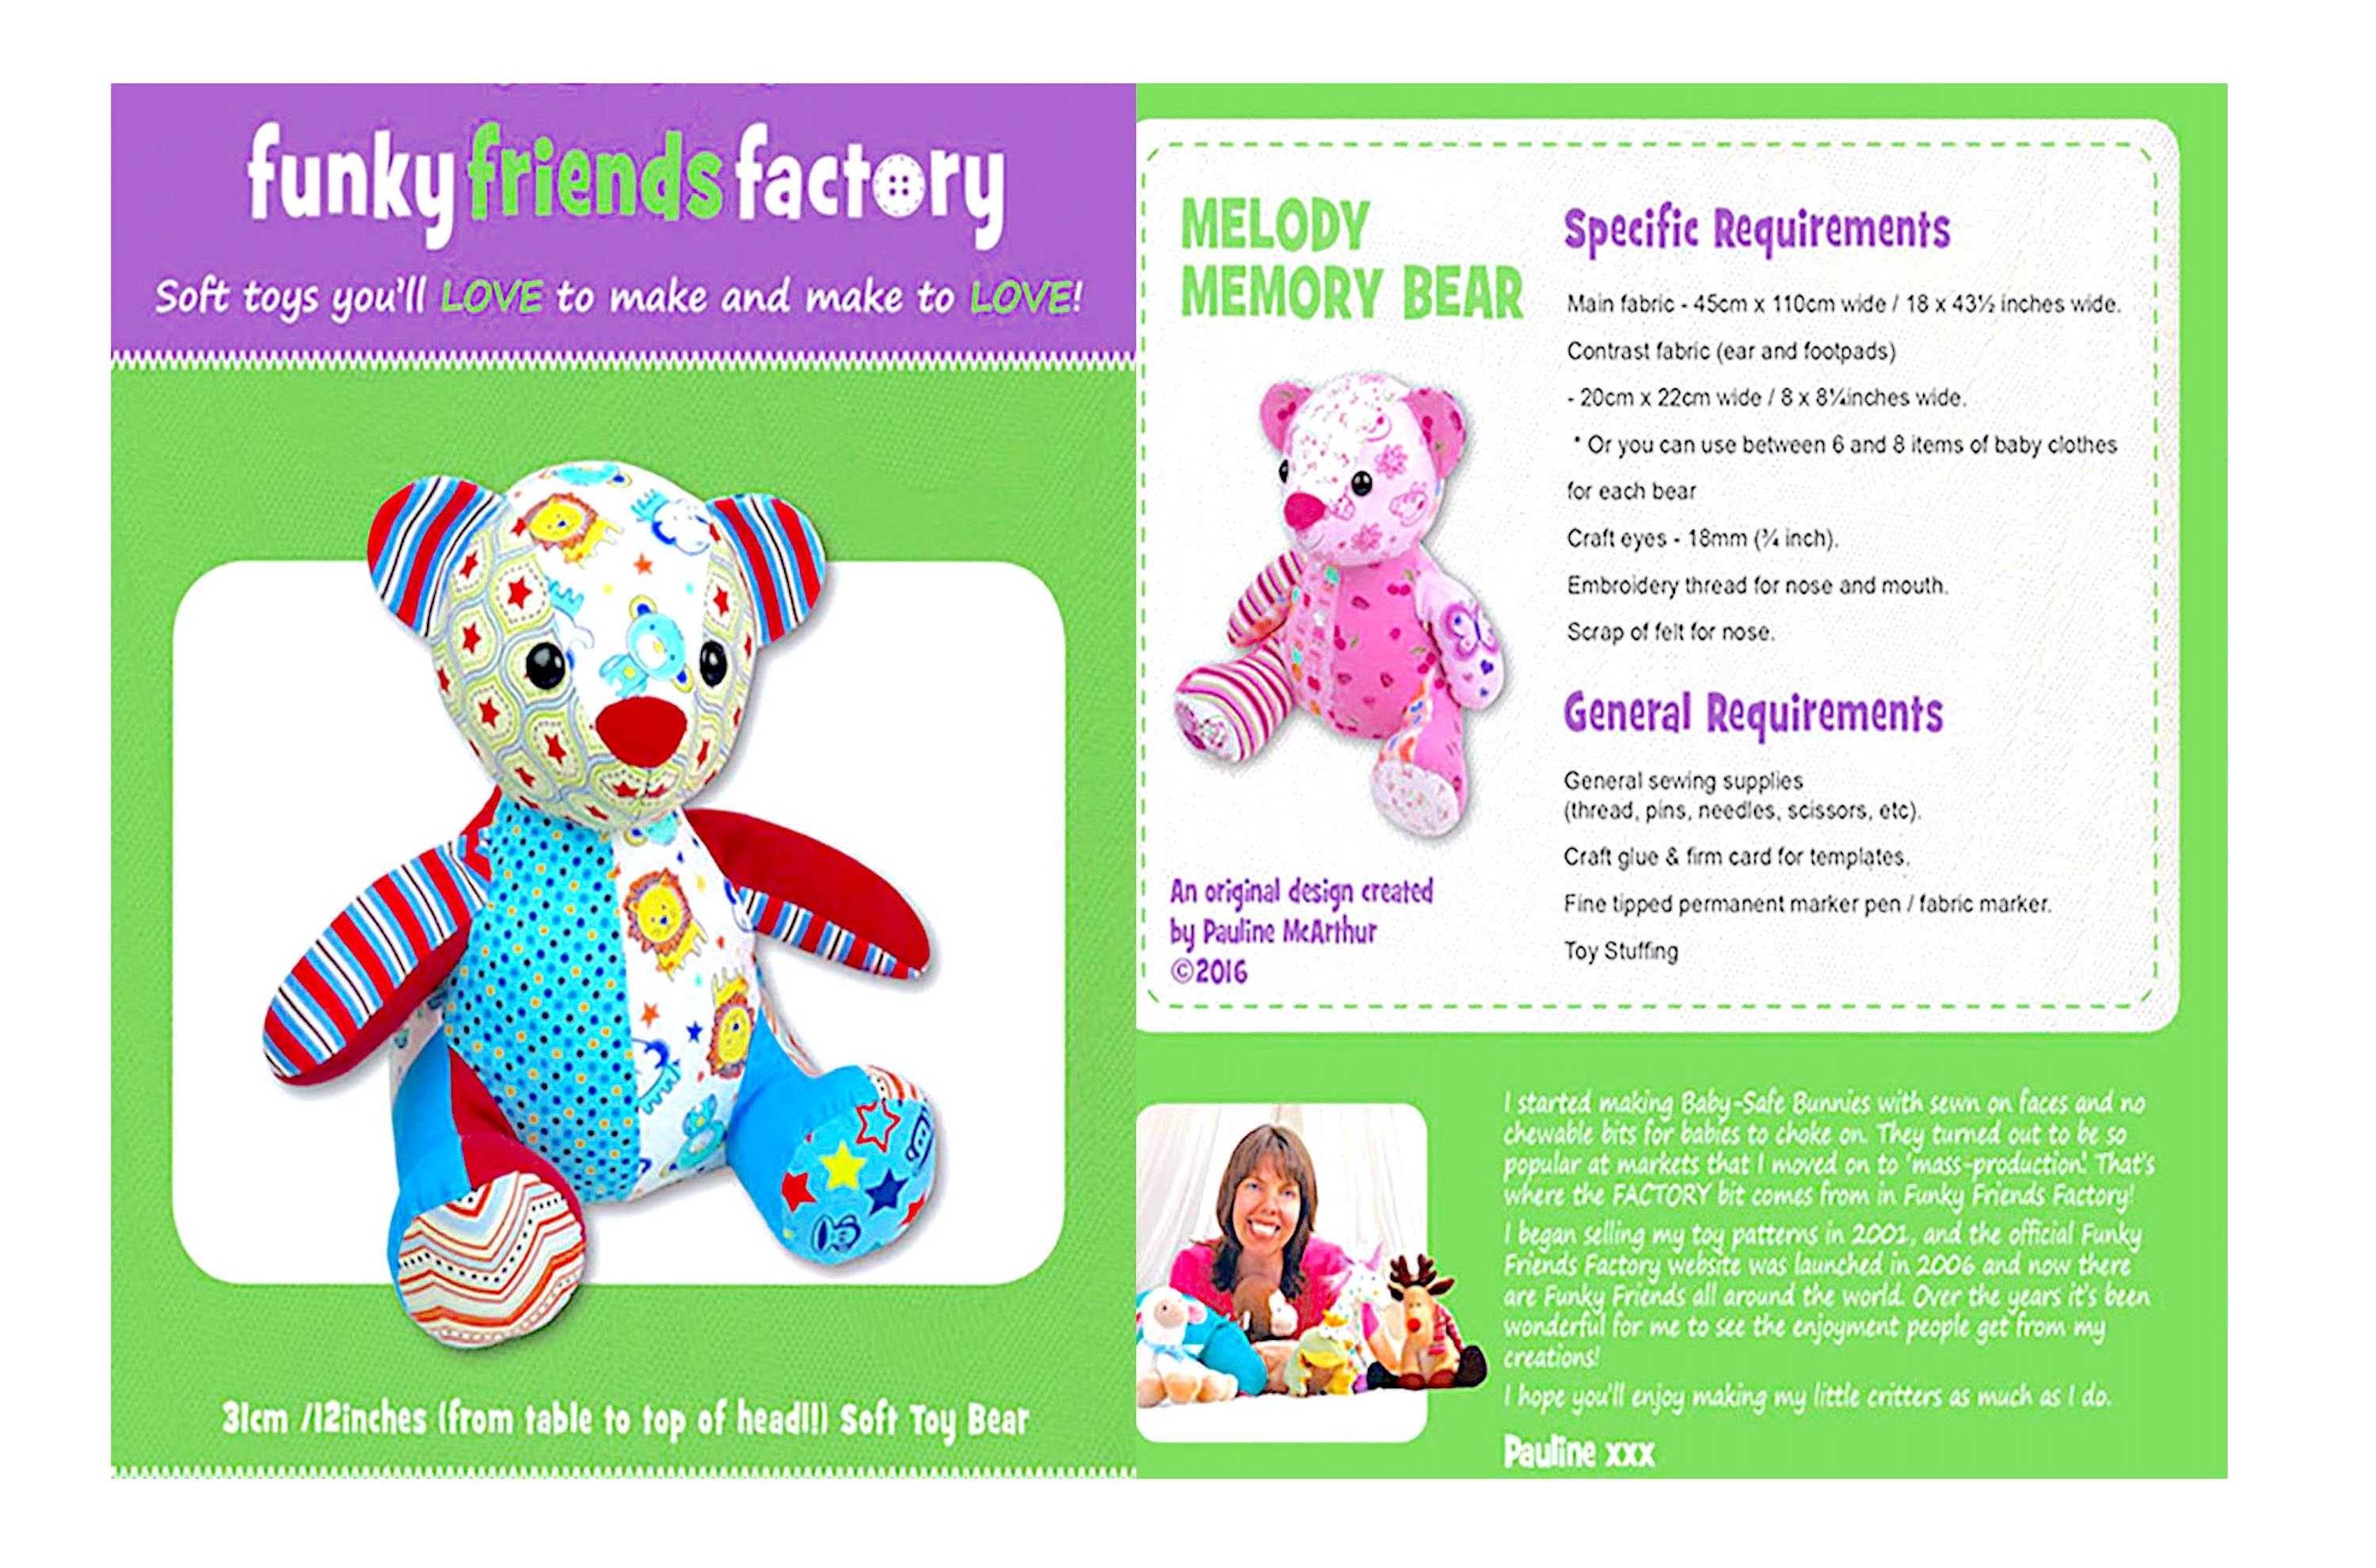 Funky Friends Factory Melody Memory Bear Sewing Pattern